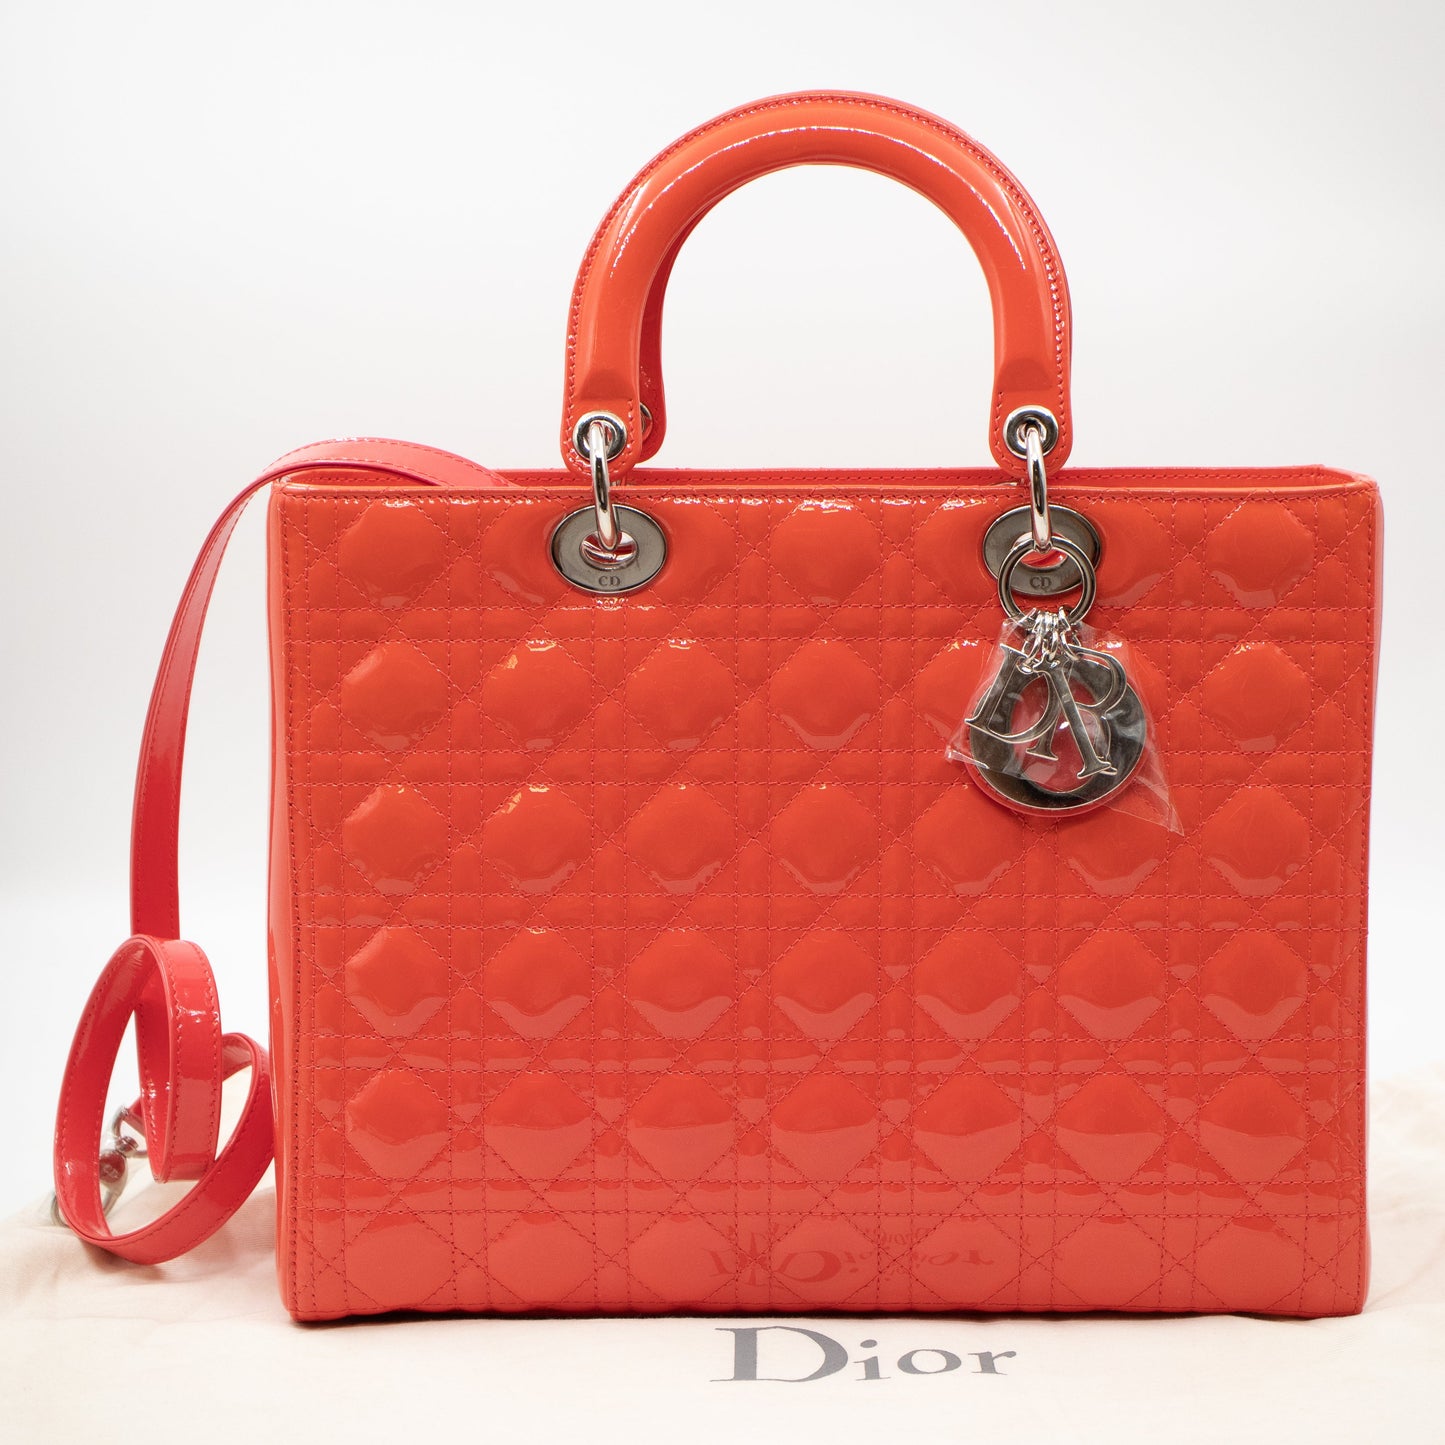 Lady Dior Large Papaya Patent Leather